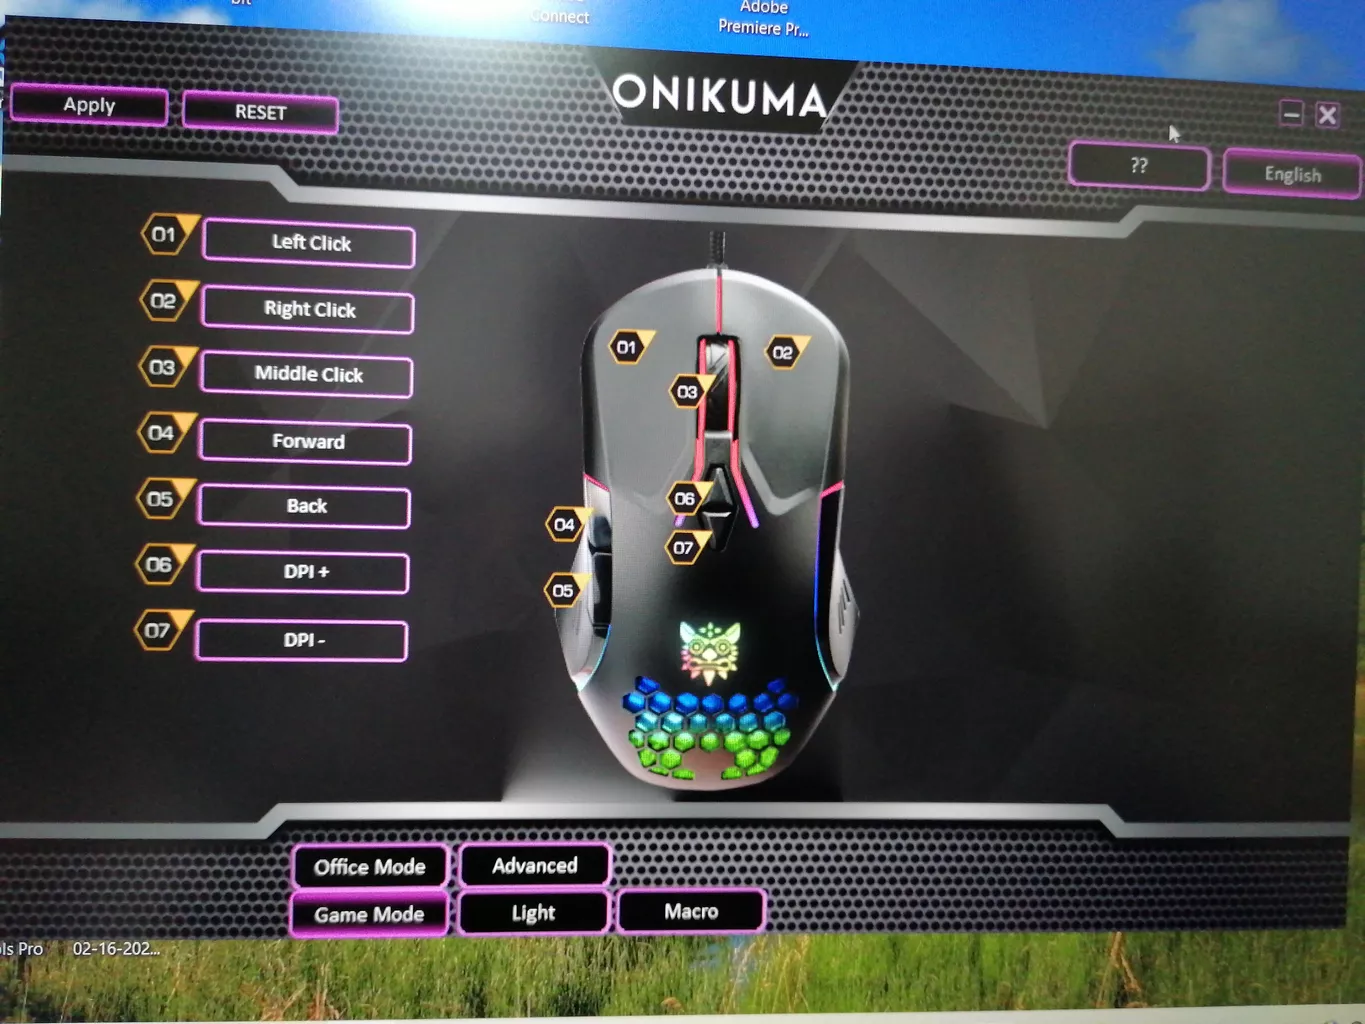 ماوس مخصوص بازی اونیکوما مدل CW902